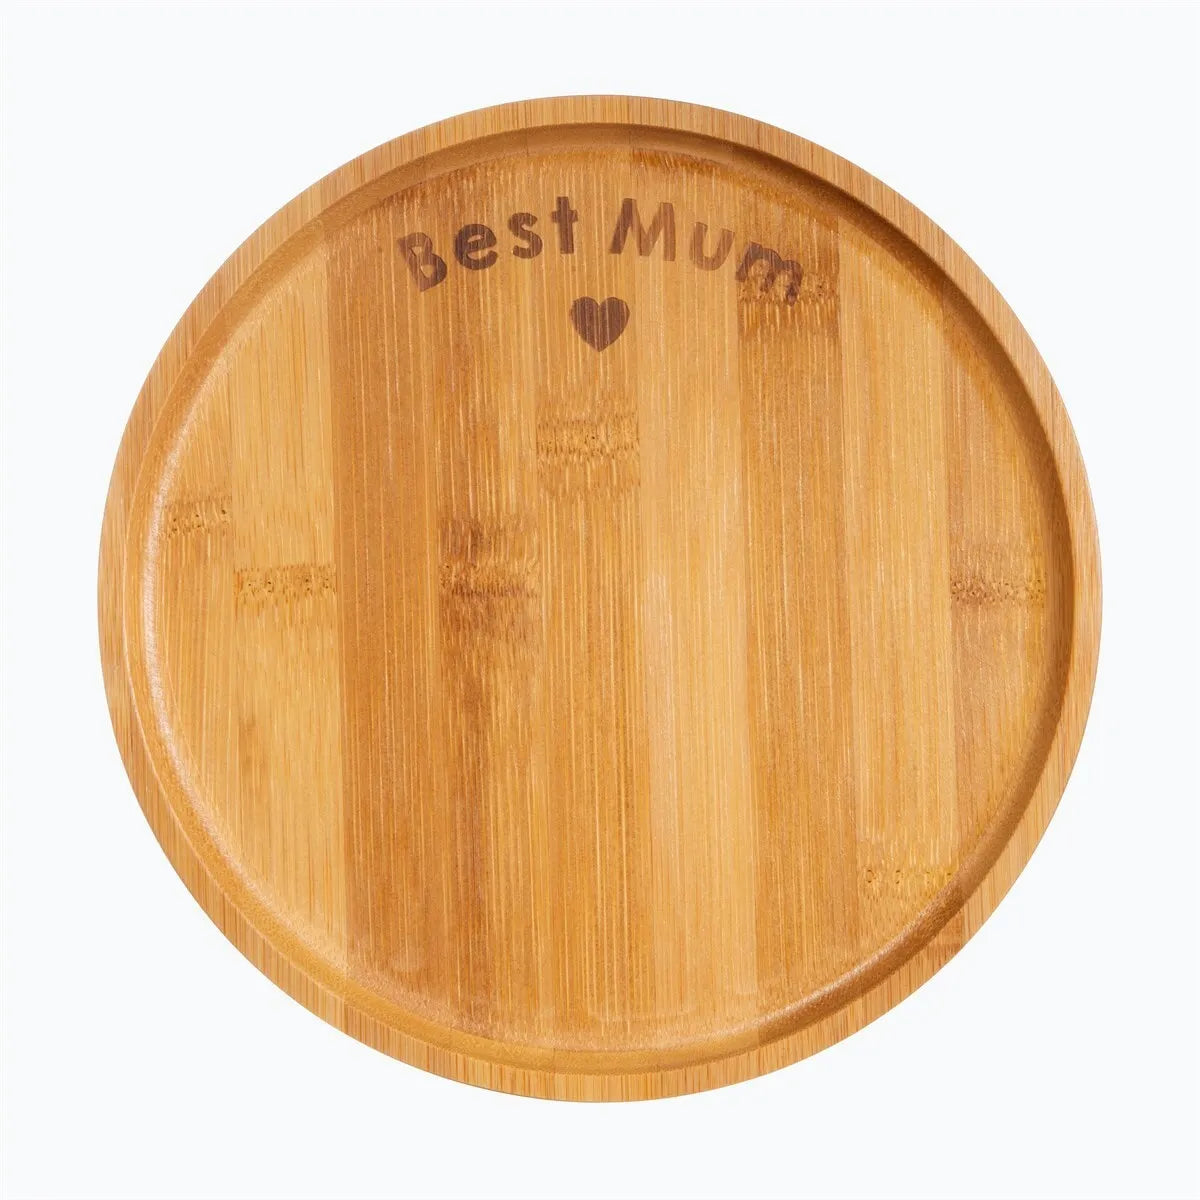 Best Mum Bamboo Plate